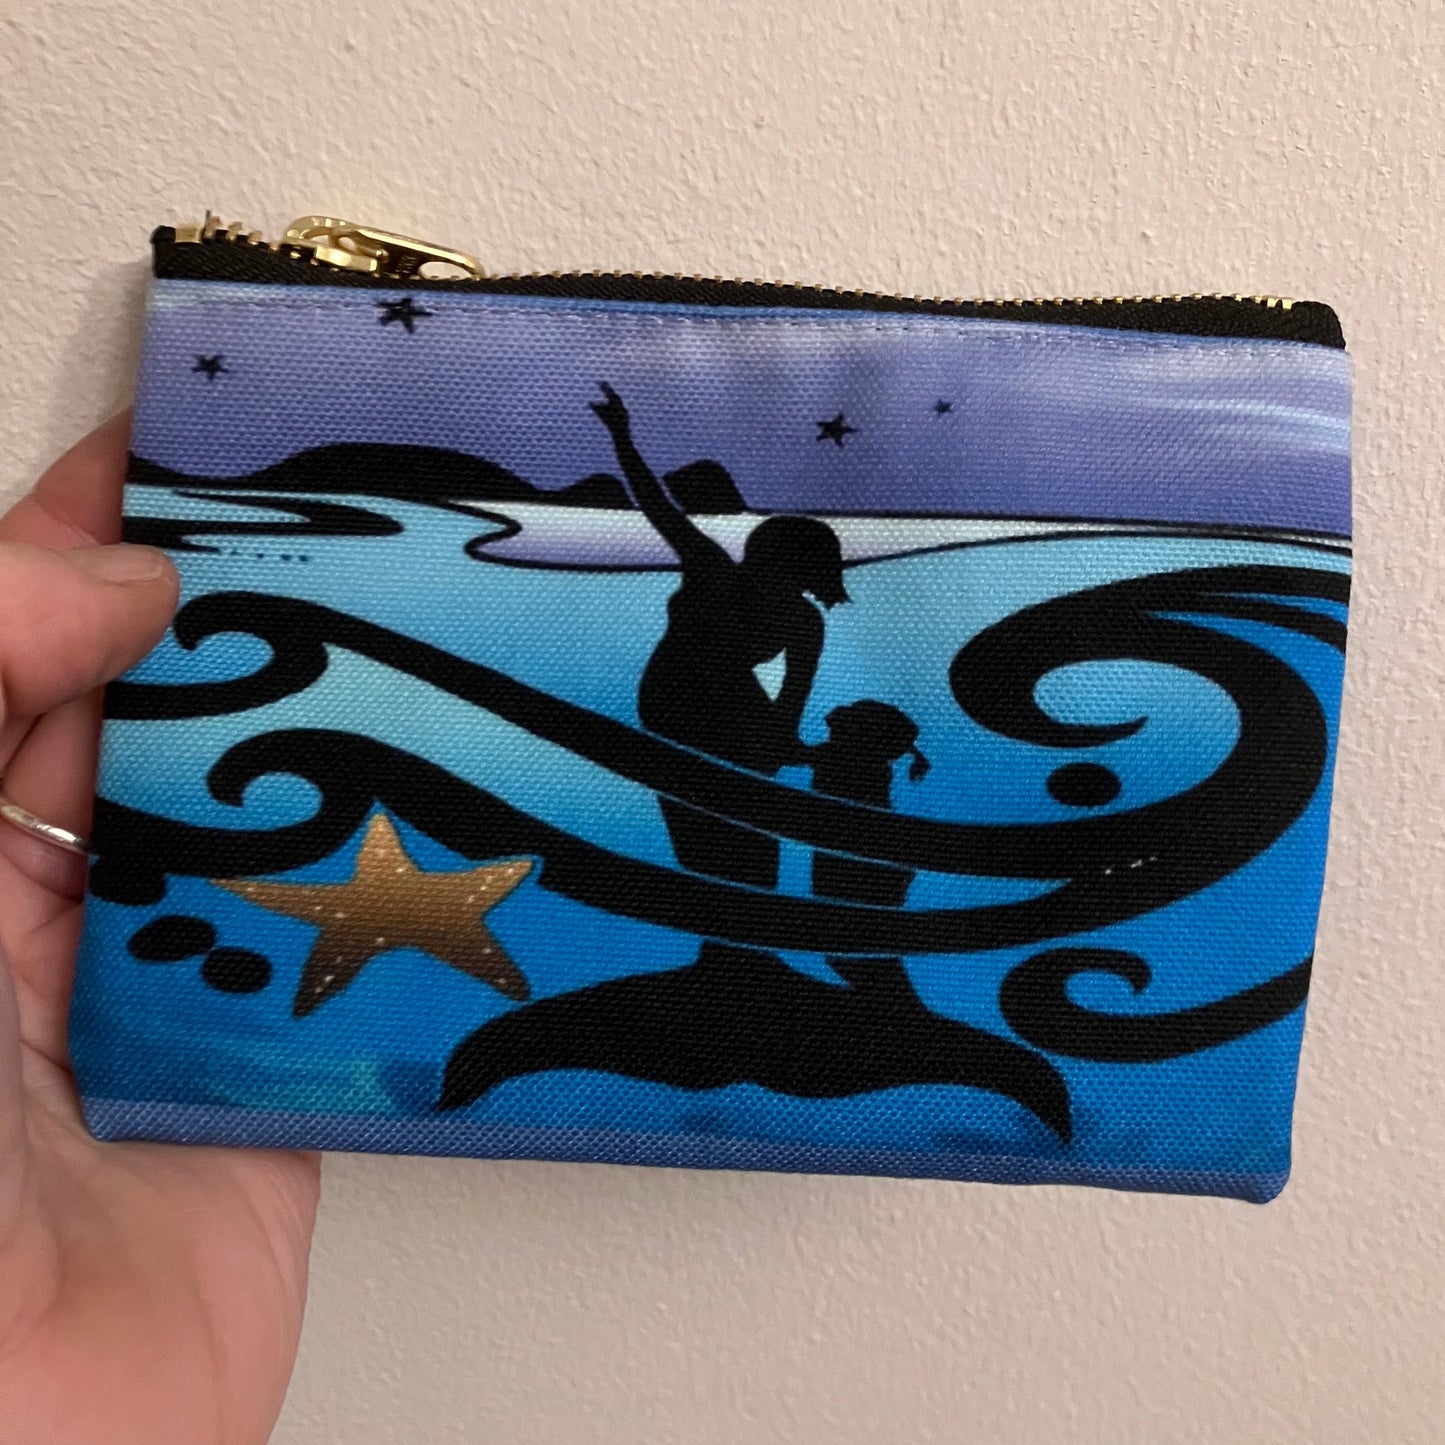 Gower mermaids purse